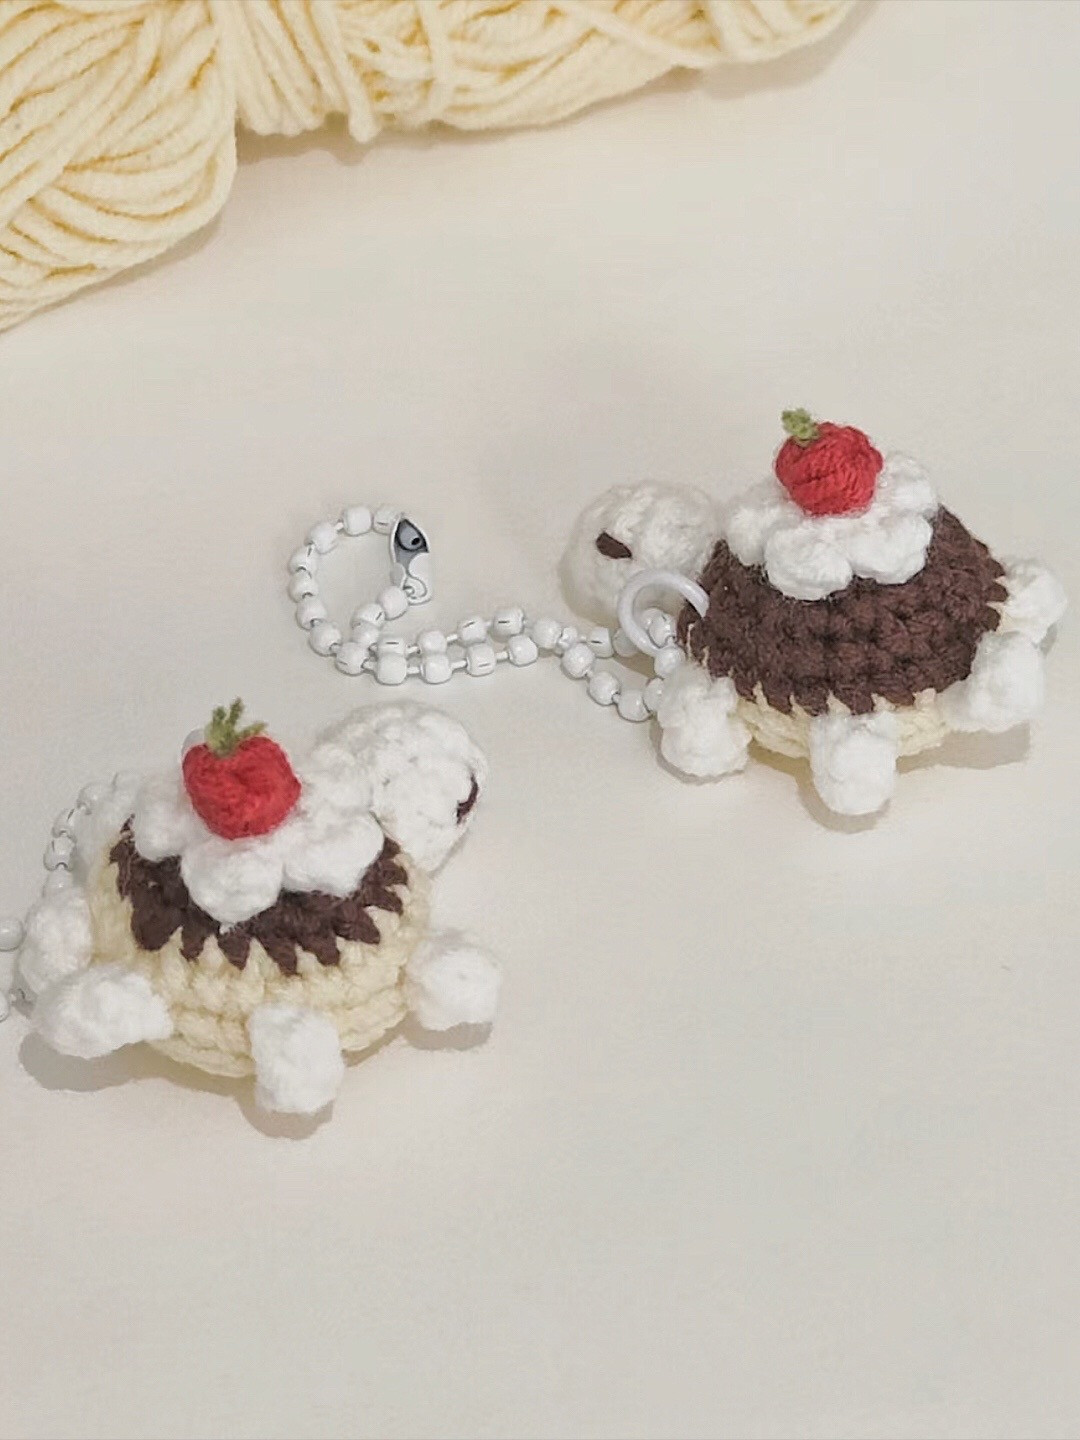 Strawberry turtle keychain crochet pattern